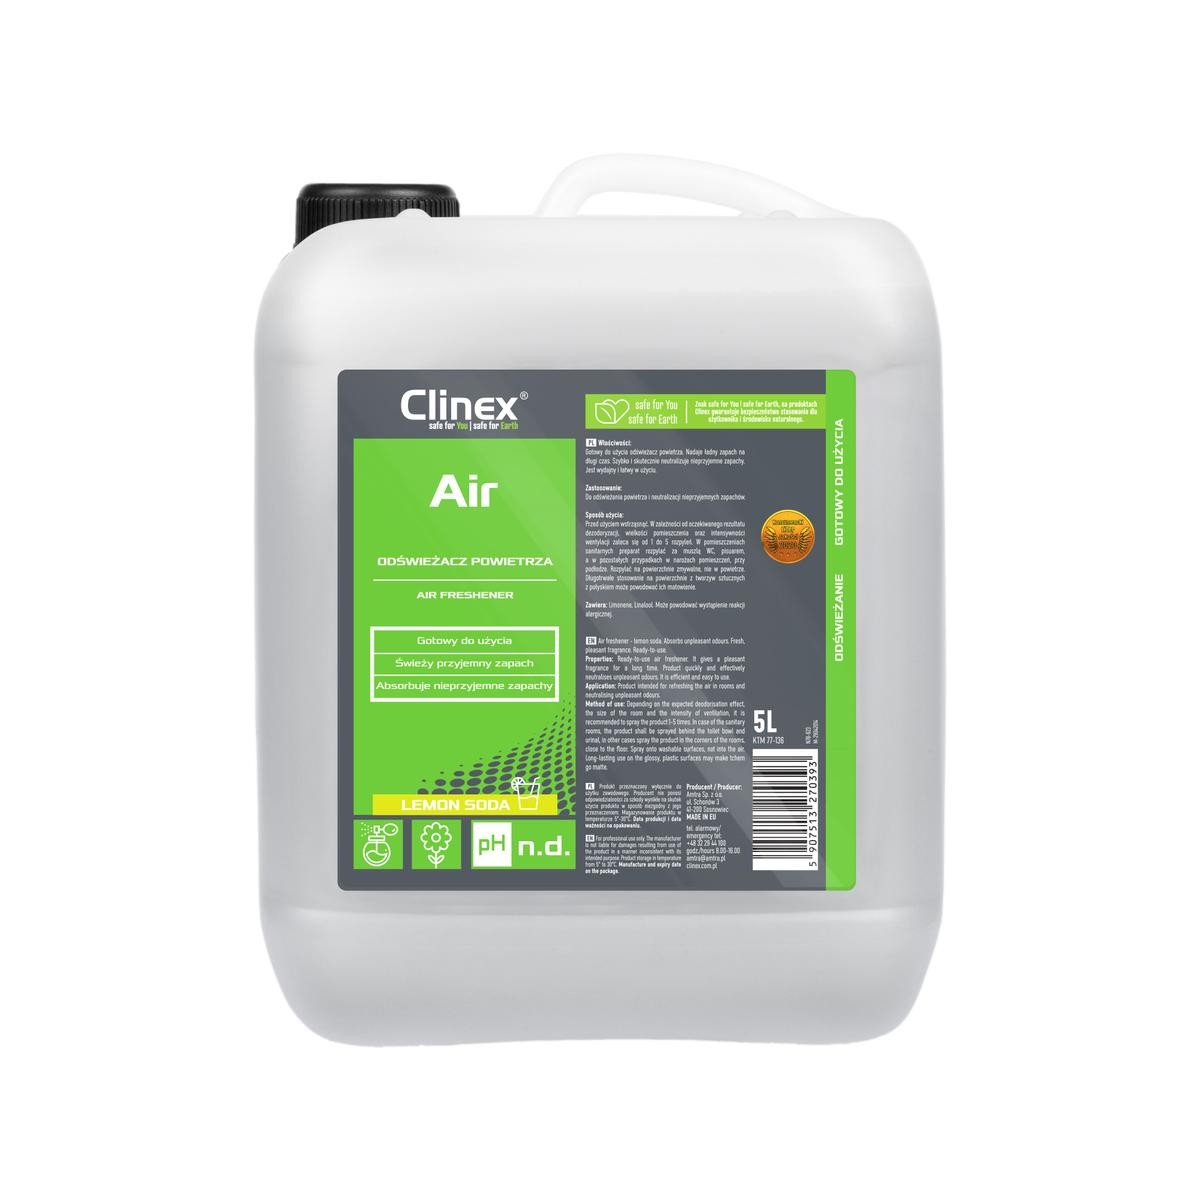 77-136 CLINEX Odour eliminator - buy online